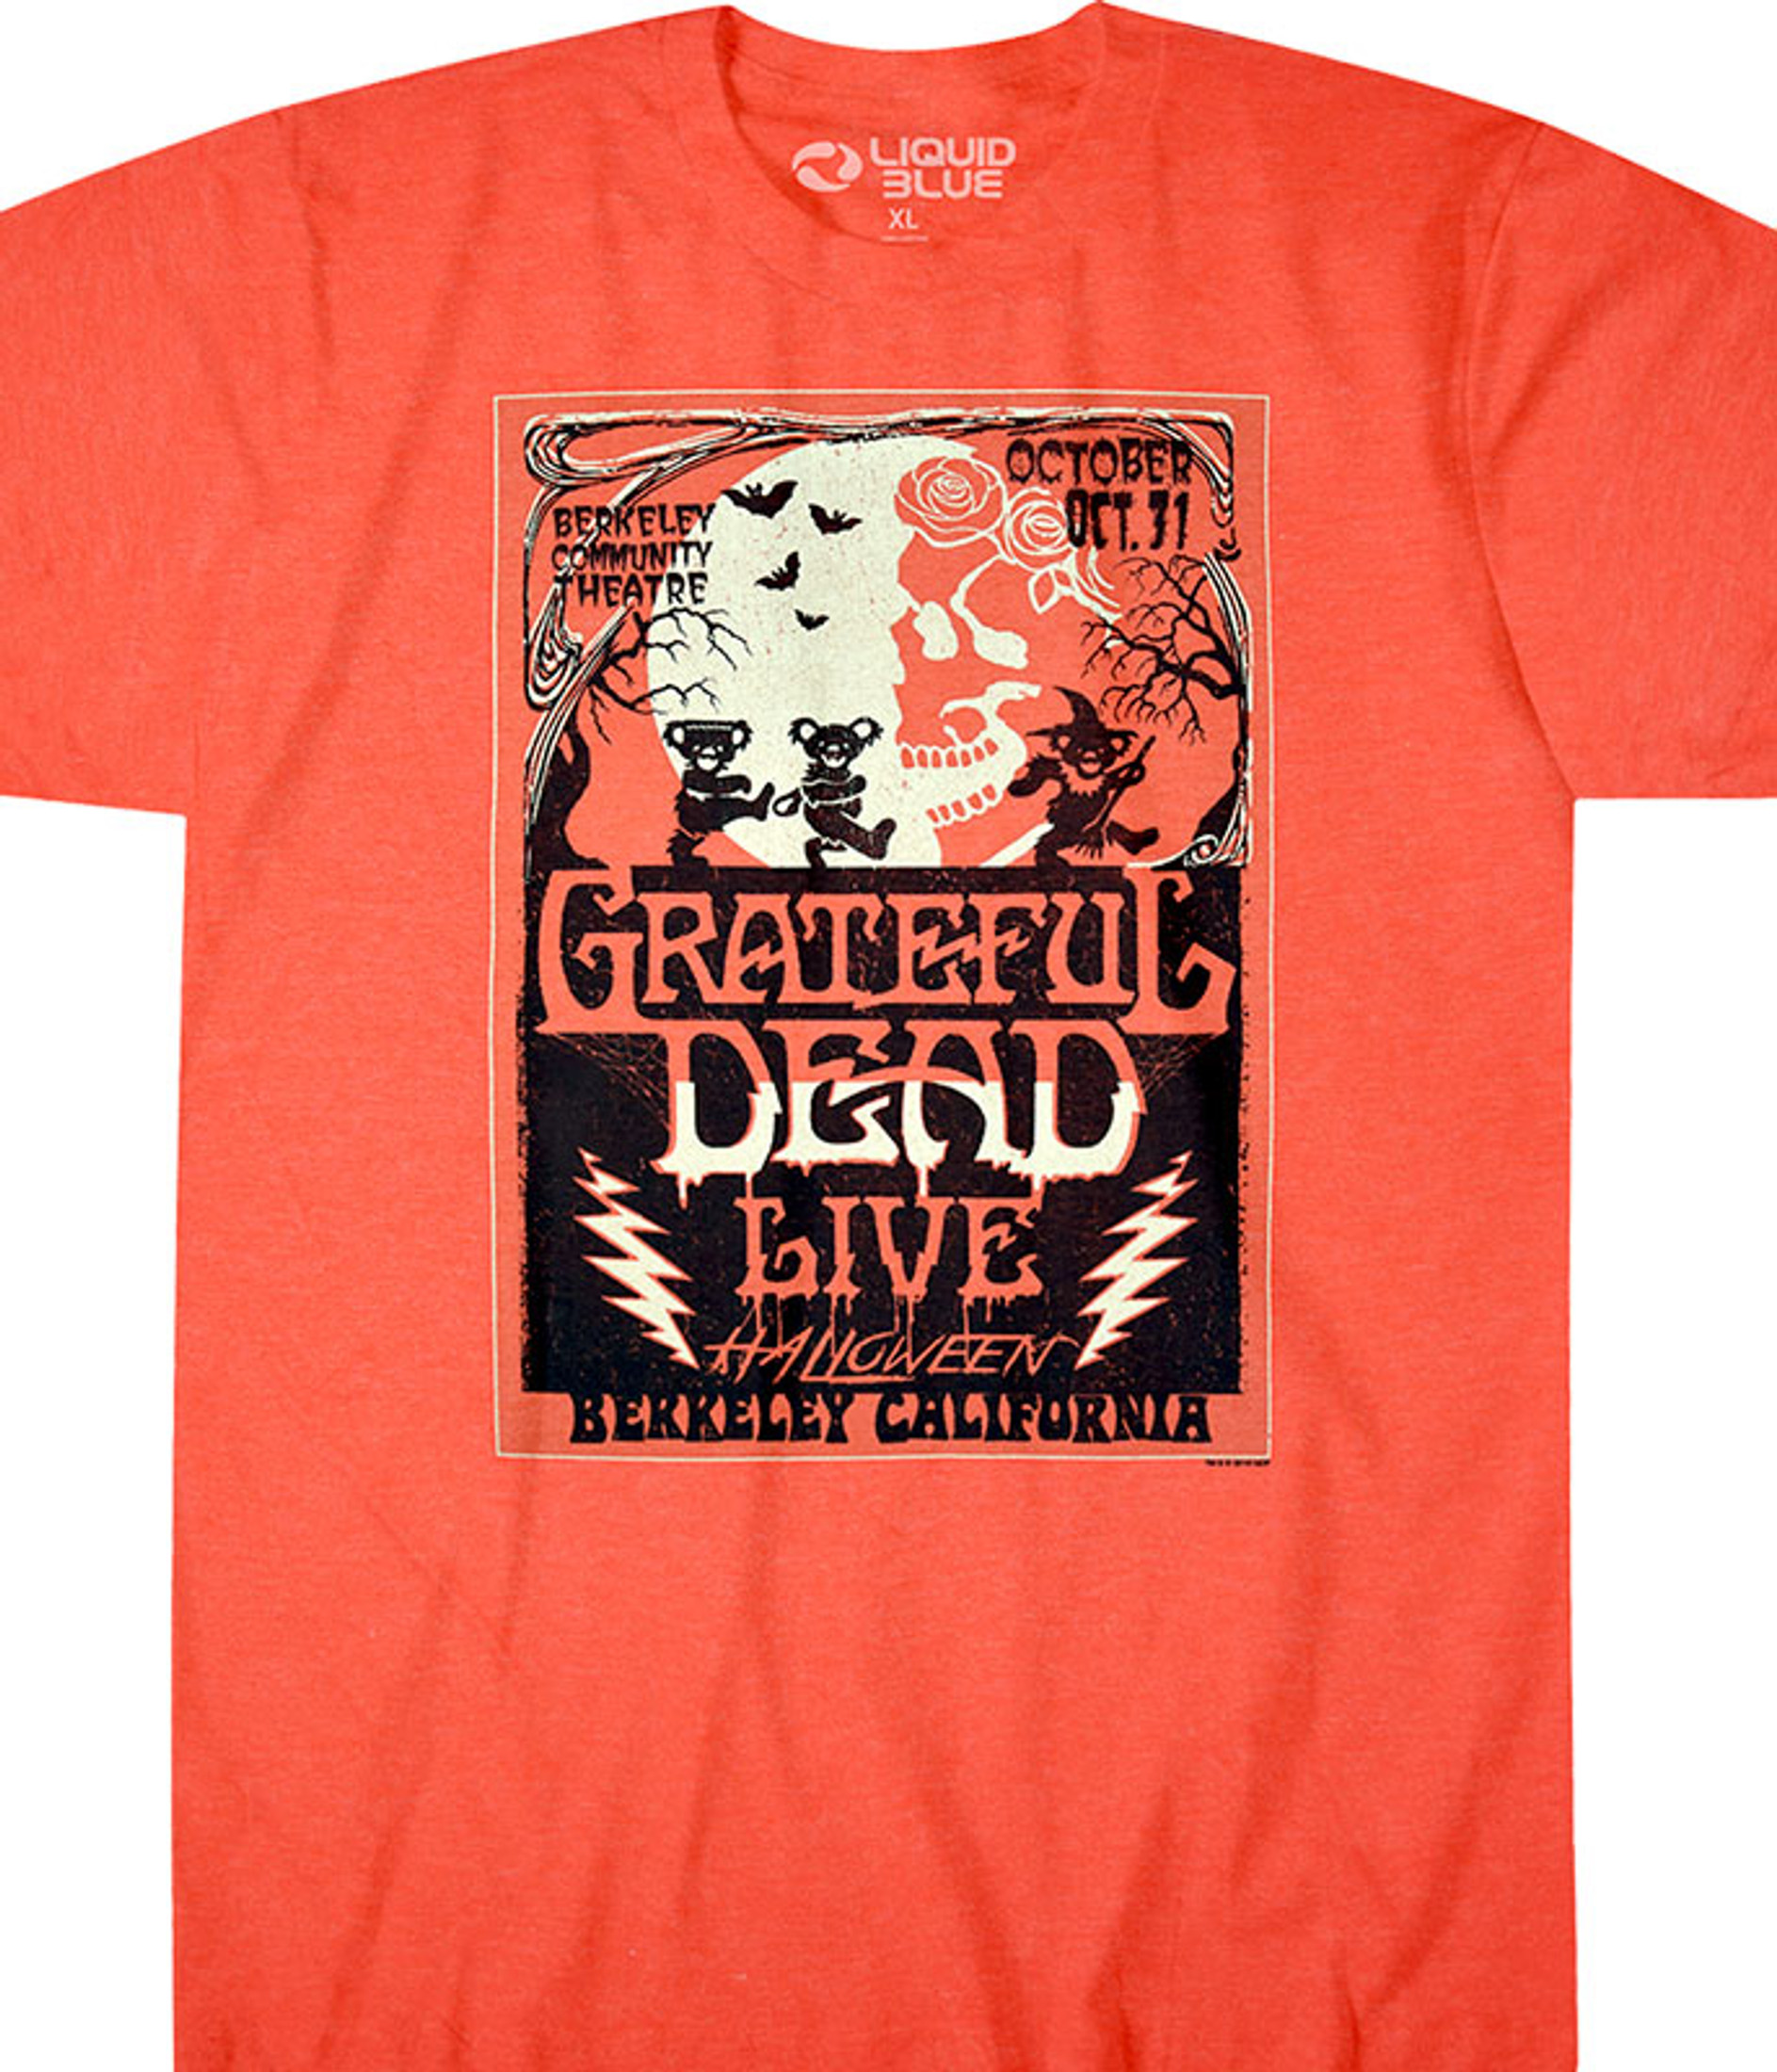 Grateful Dead Lunar Dead Tie-Dye T-Shirt